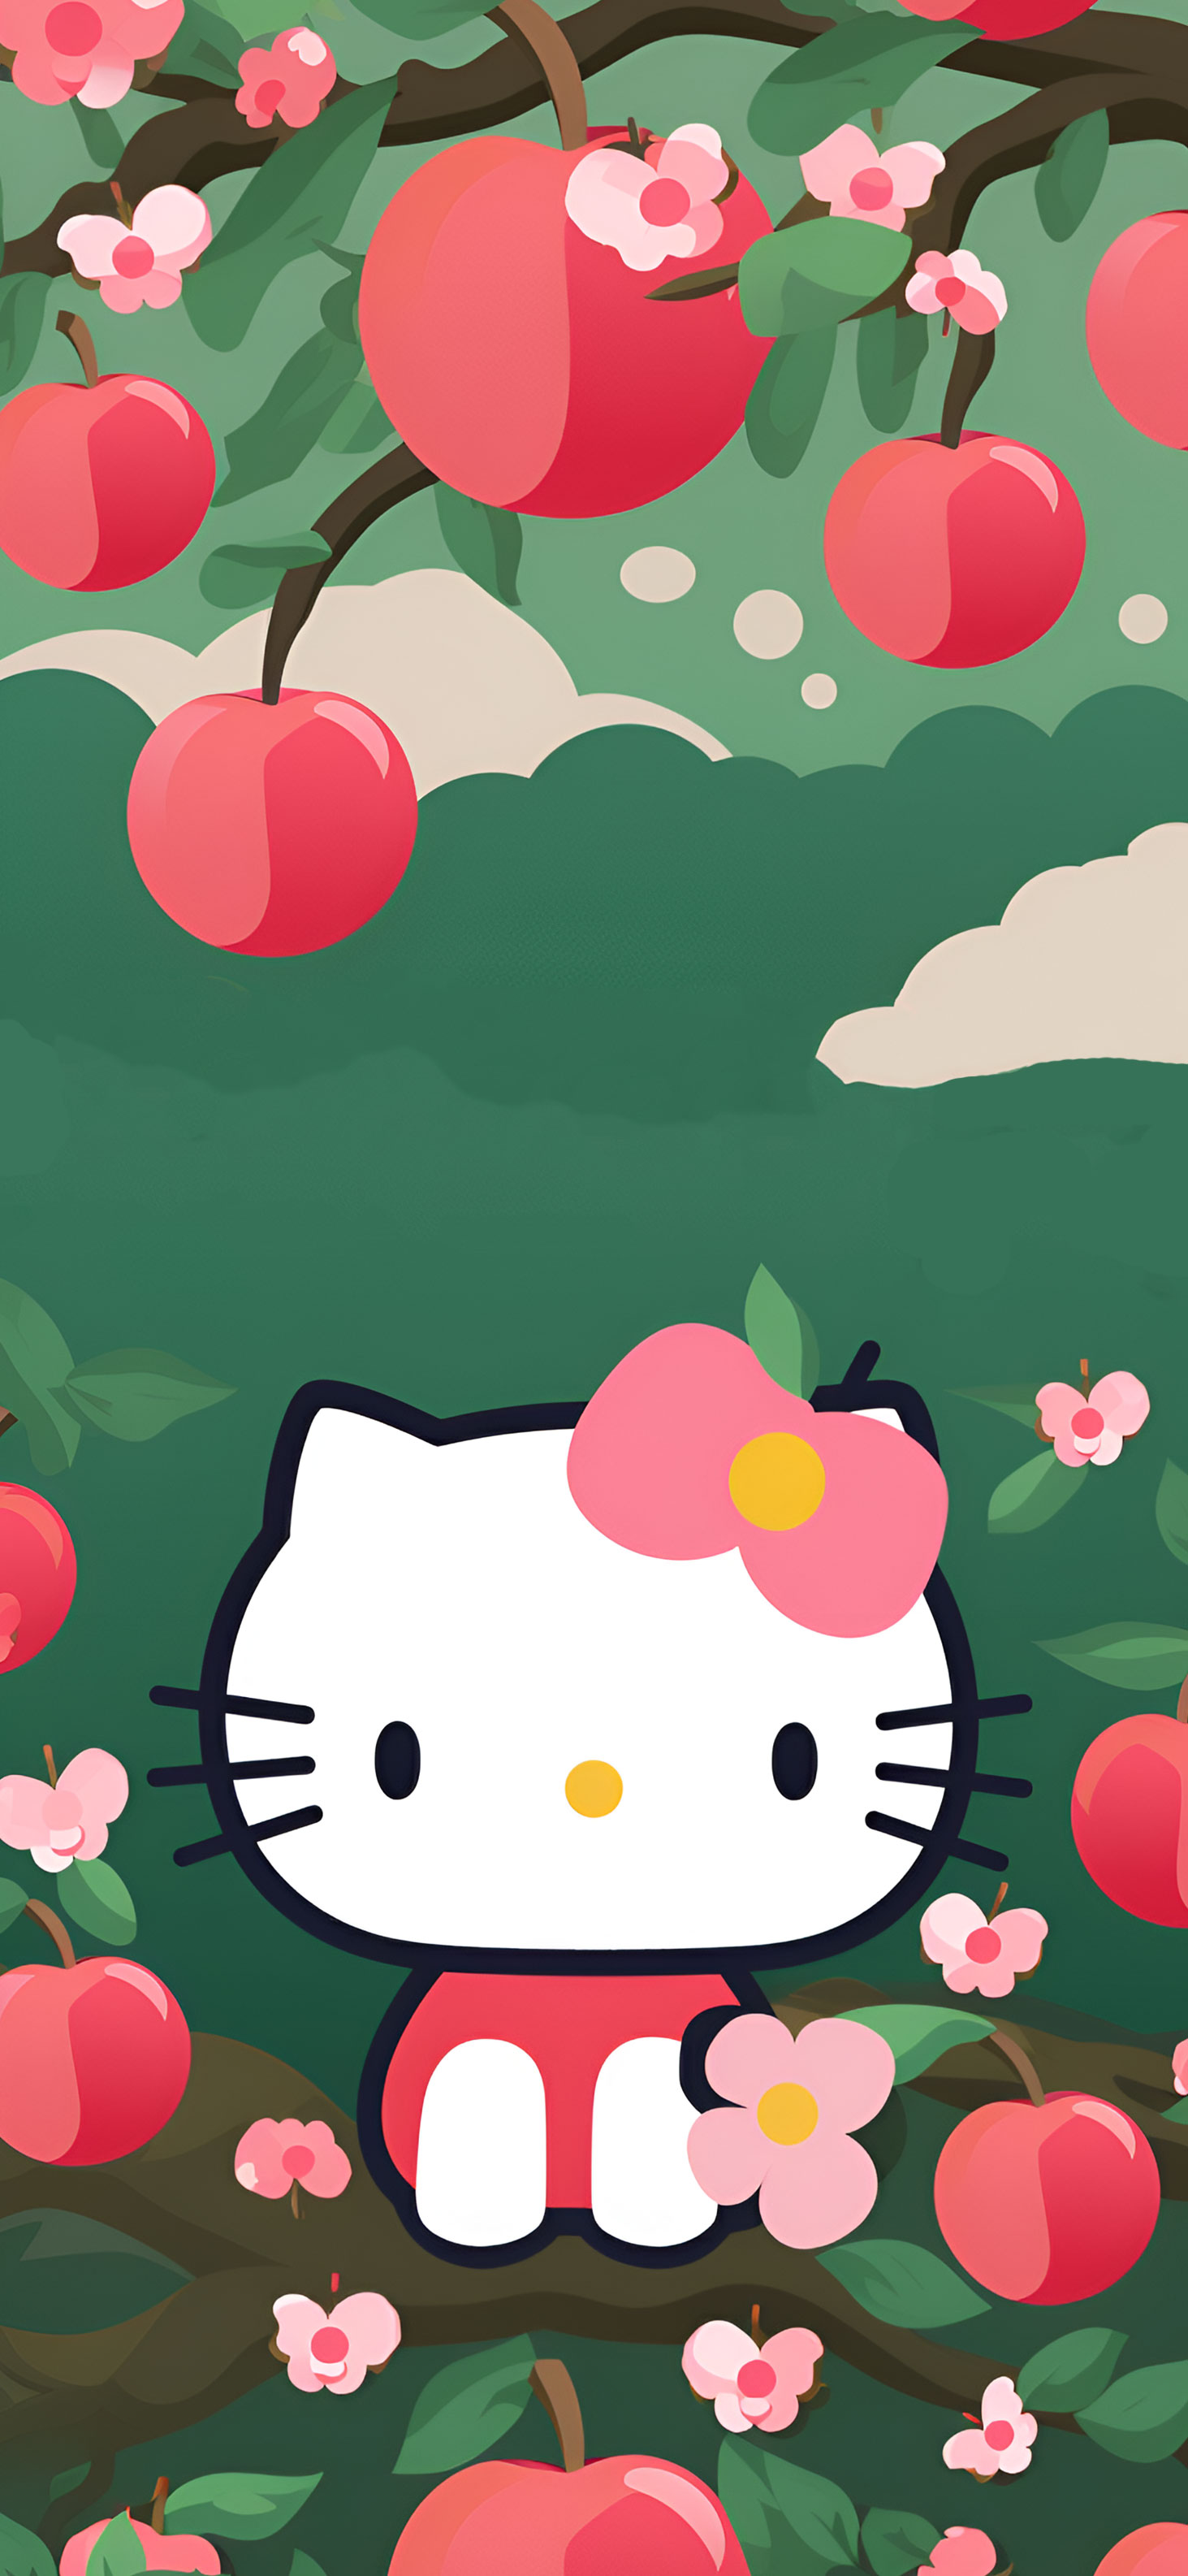 Download Adorable Kawaii Hello Kitty Wallpaper Wallpaper | Wallpapers.com